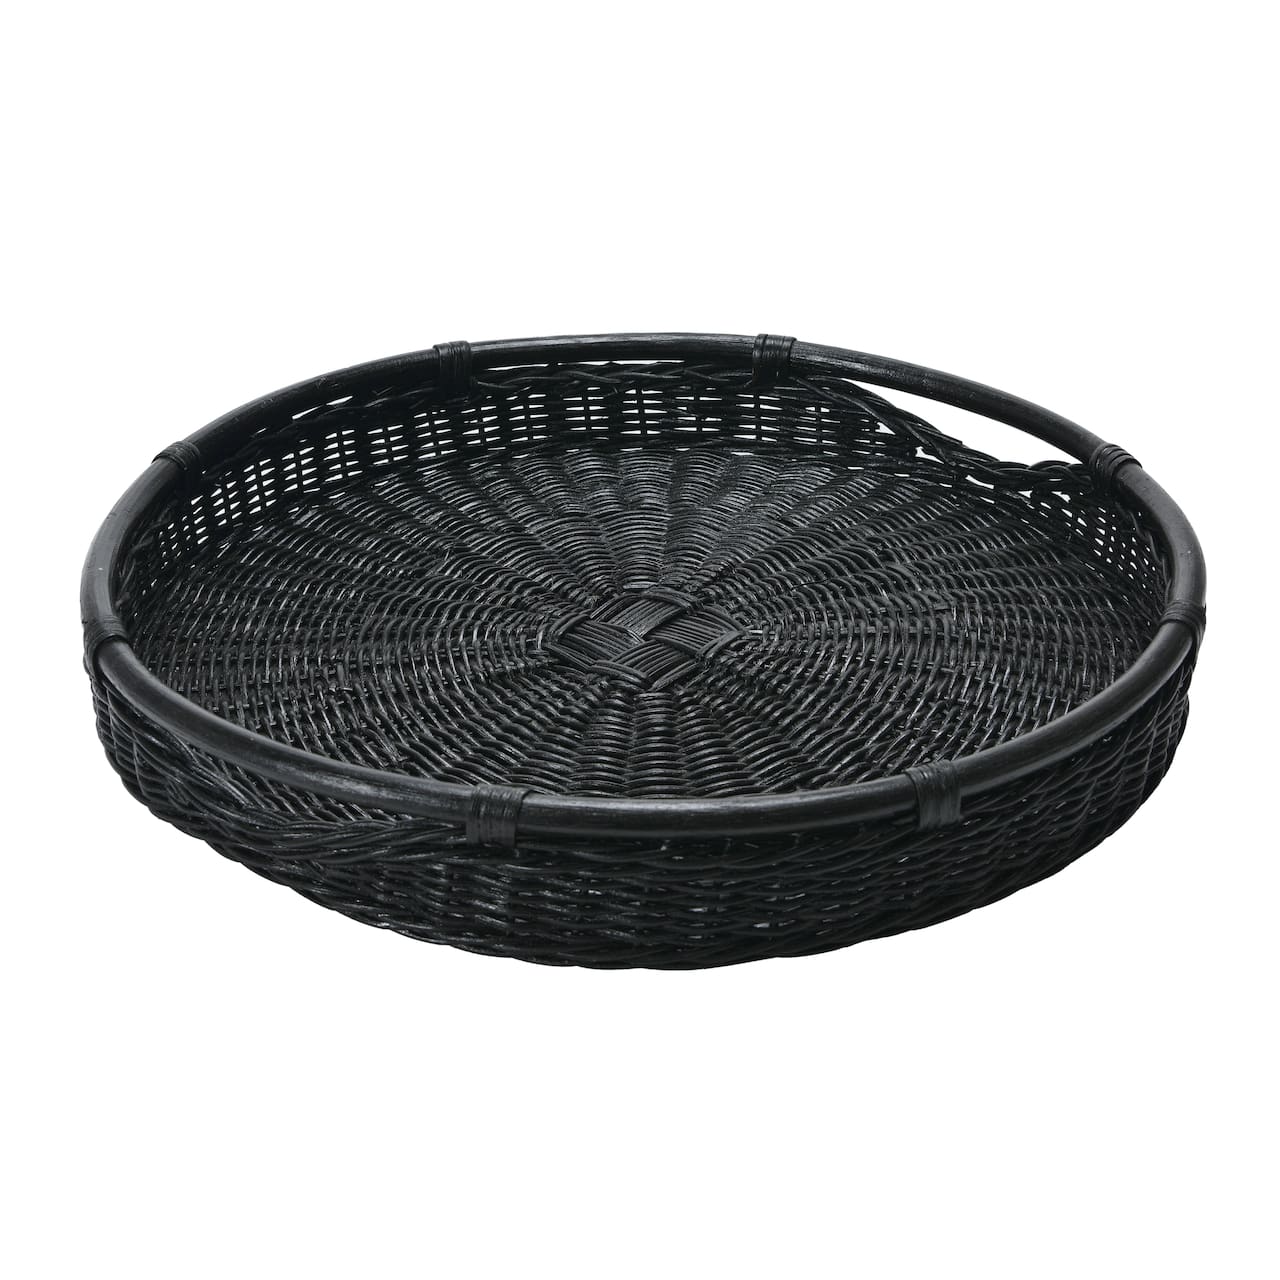 Black Wicker Trays with Handle Set